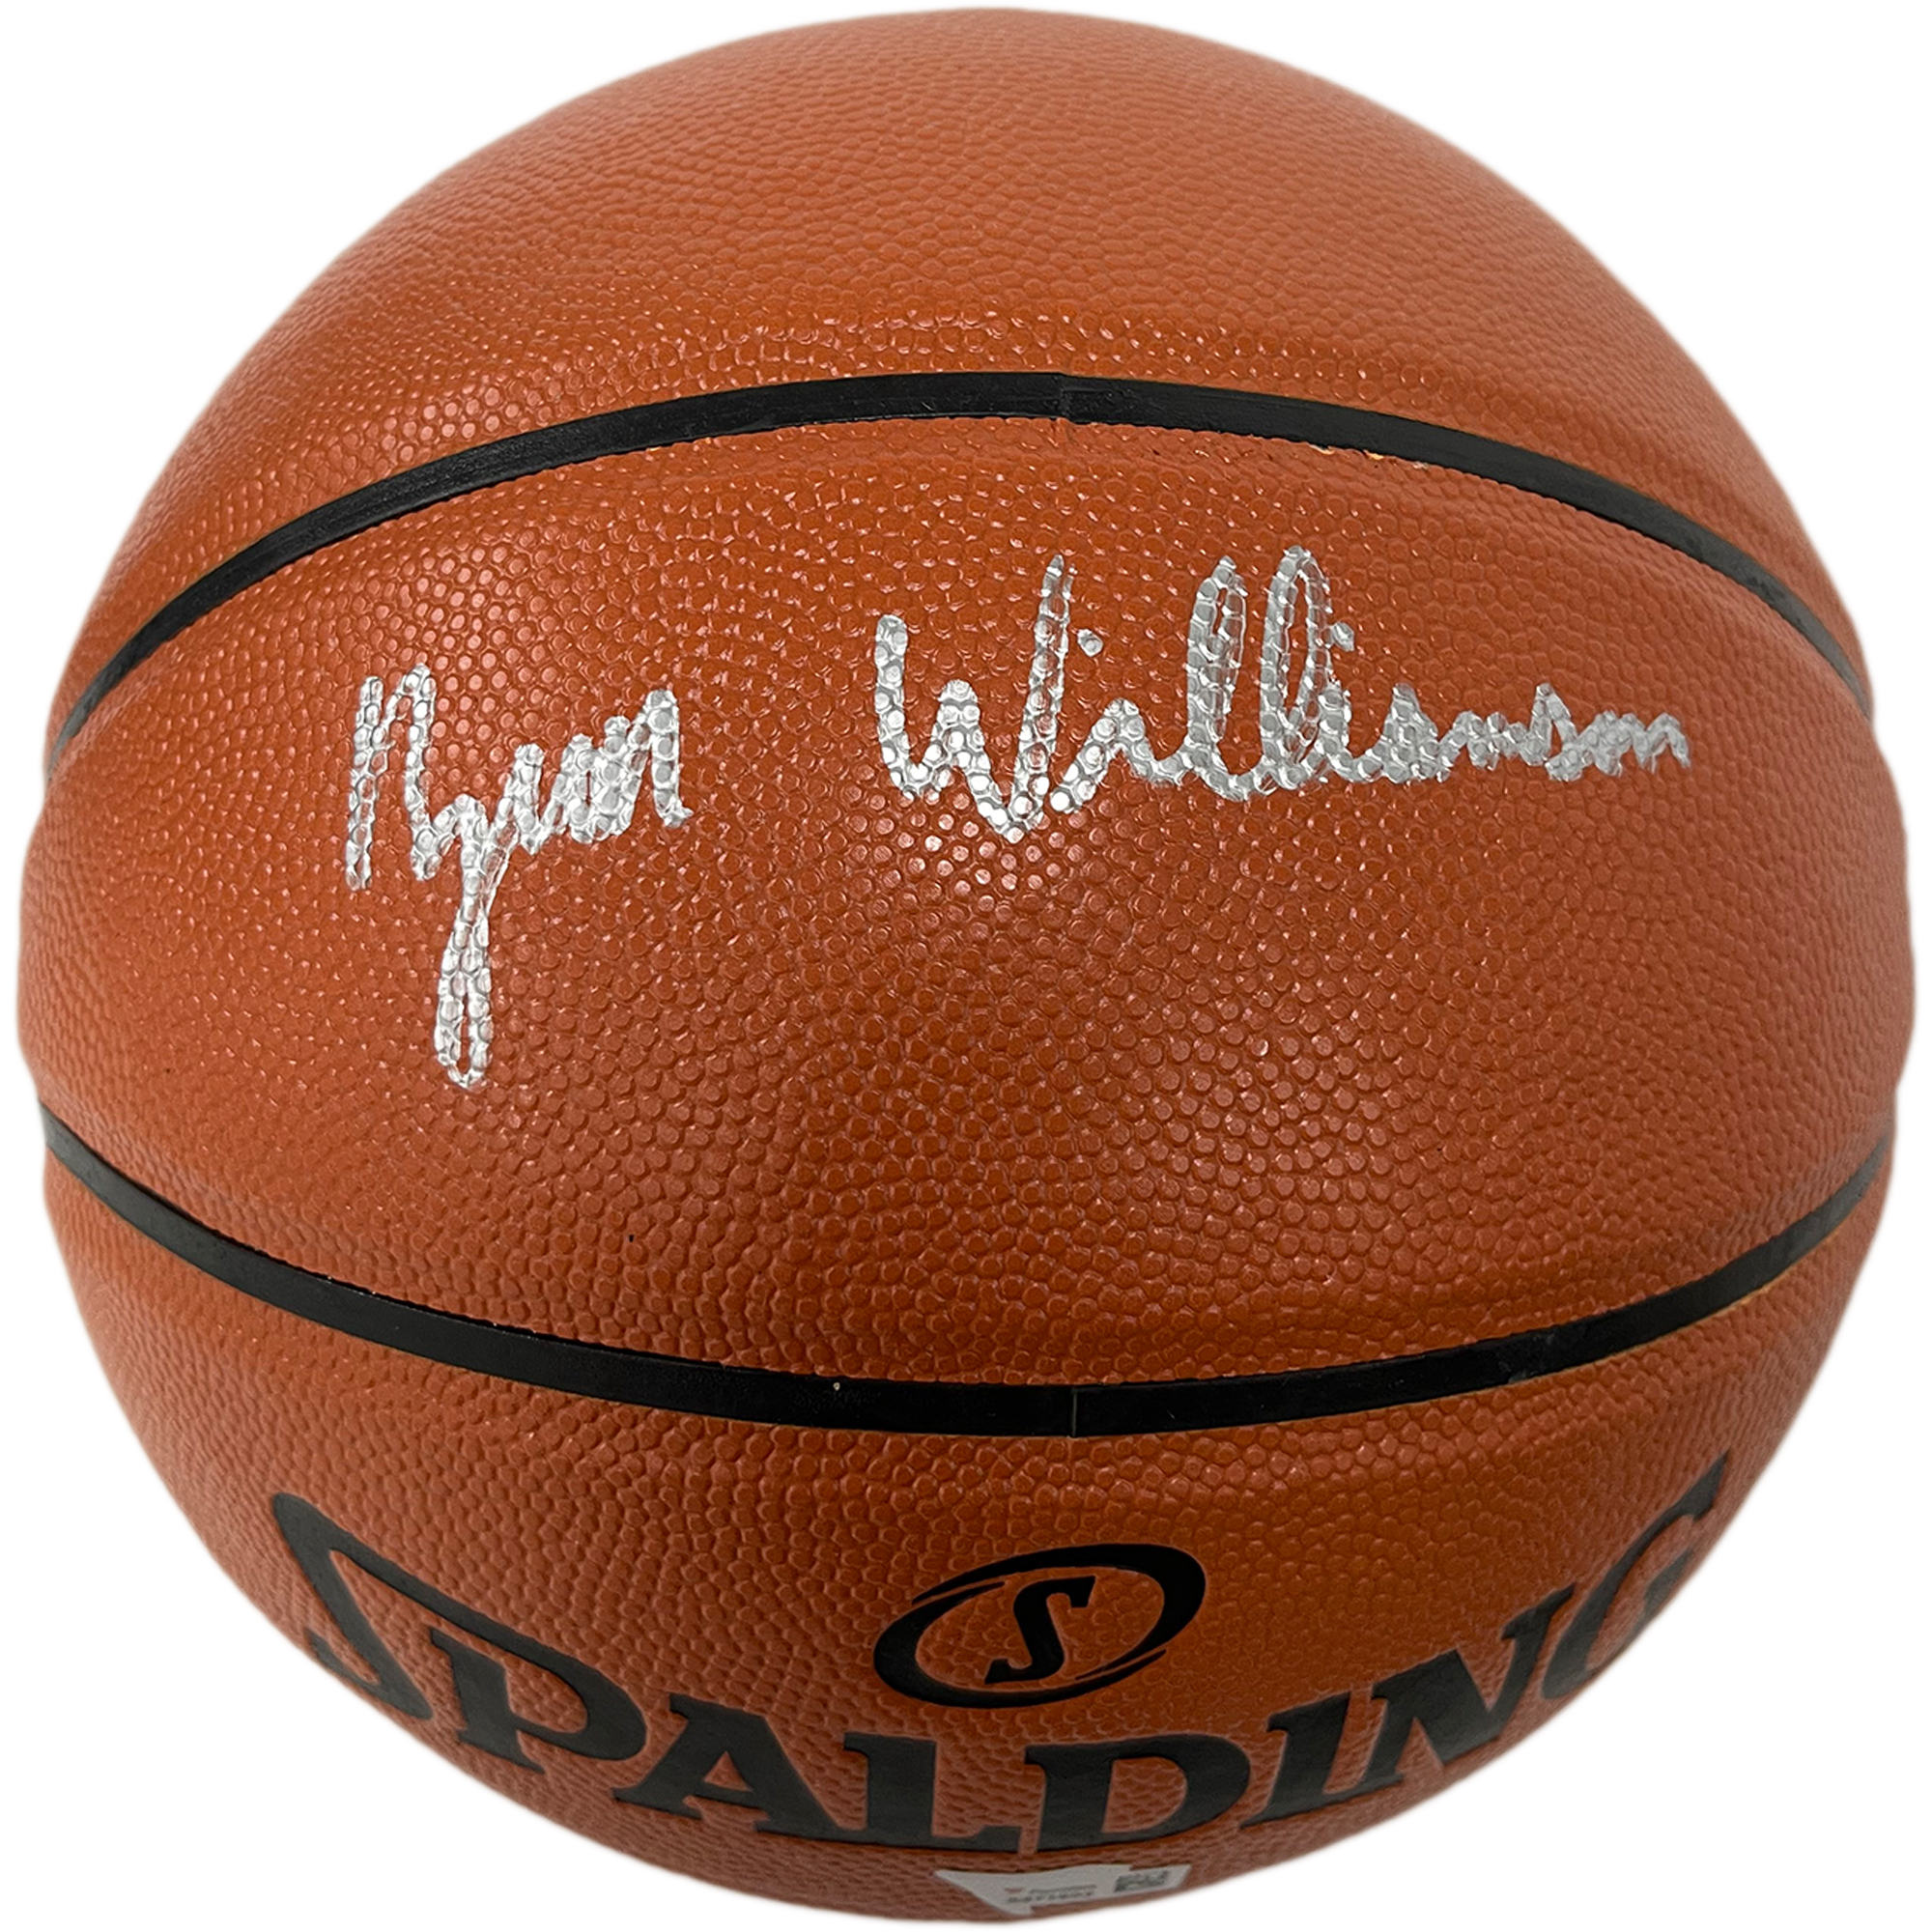 Basketball – Zion Williamson Hand Signed Spalding Basketball (Fa...